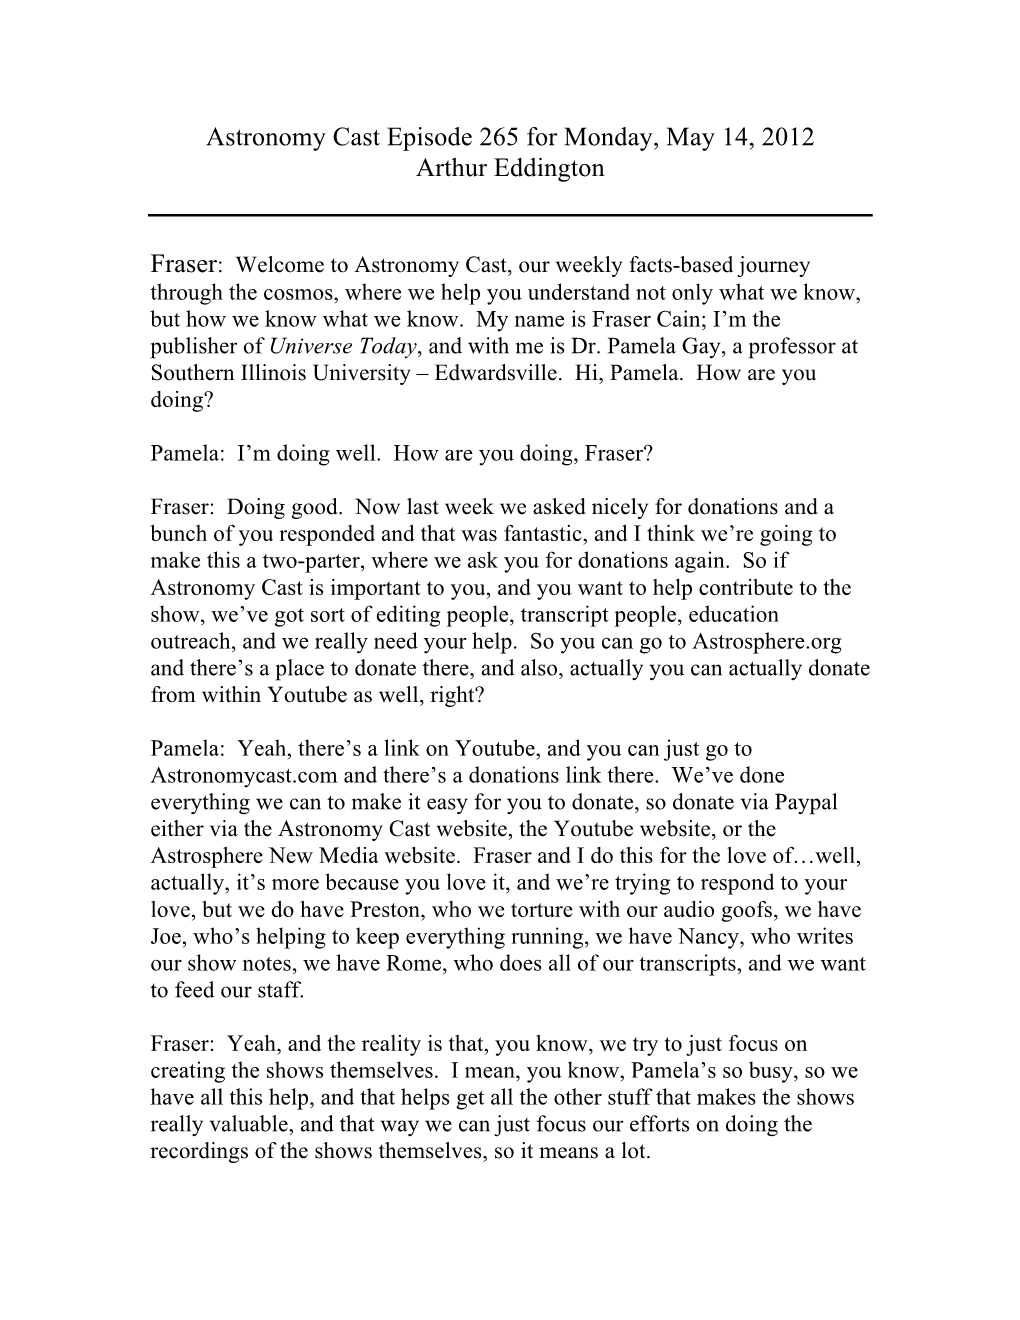 Astronomy Cast Episode 265 for Monday, May 14, 2012 Arthur Eddington